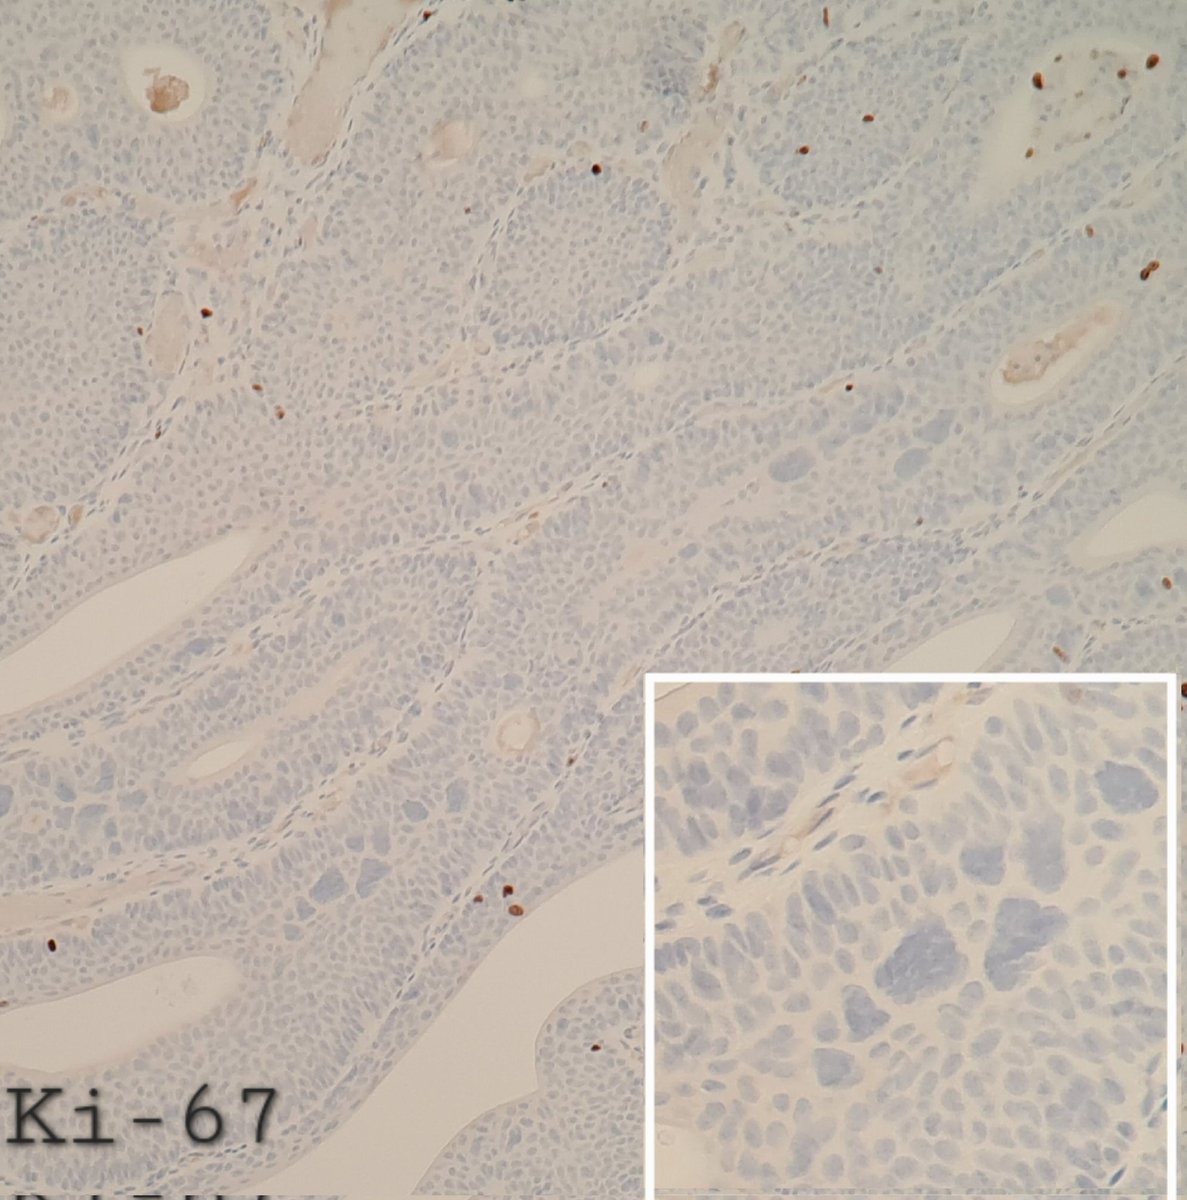 M, 79Y, bladder neck papillary tumour 2cm. Inverted papilloma with degenerative atypia. Key is low ki67 index with the large atypical nuclei negative for Ki67. #GUpathology #GUPATH #GU_path